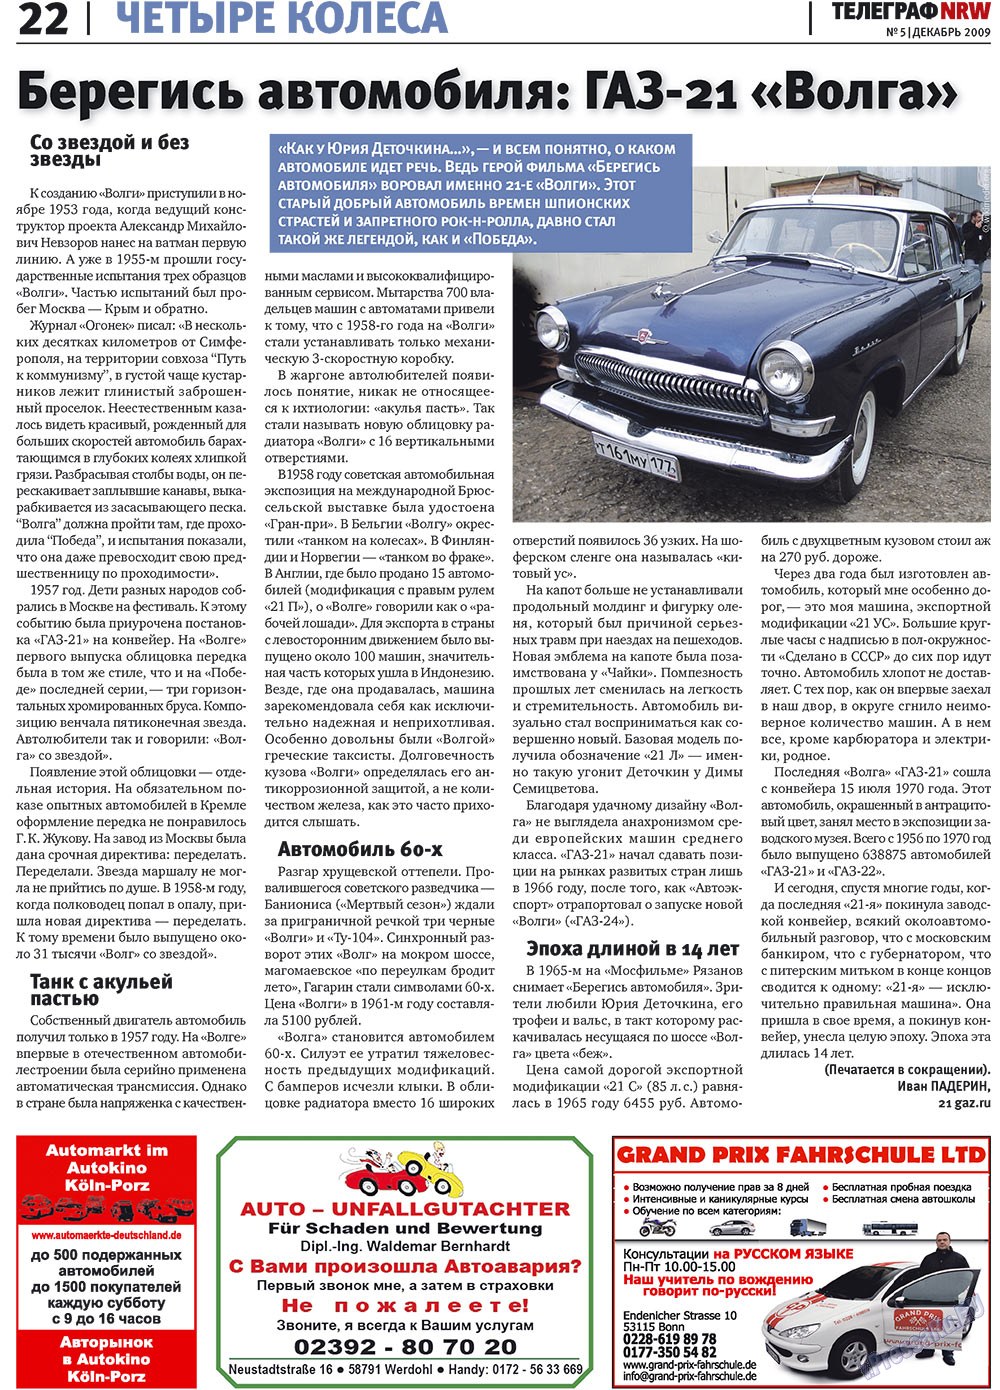 Телеграф NRW, газета. 2009 №5 стр.22